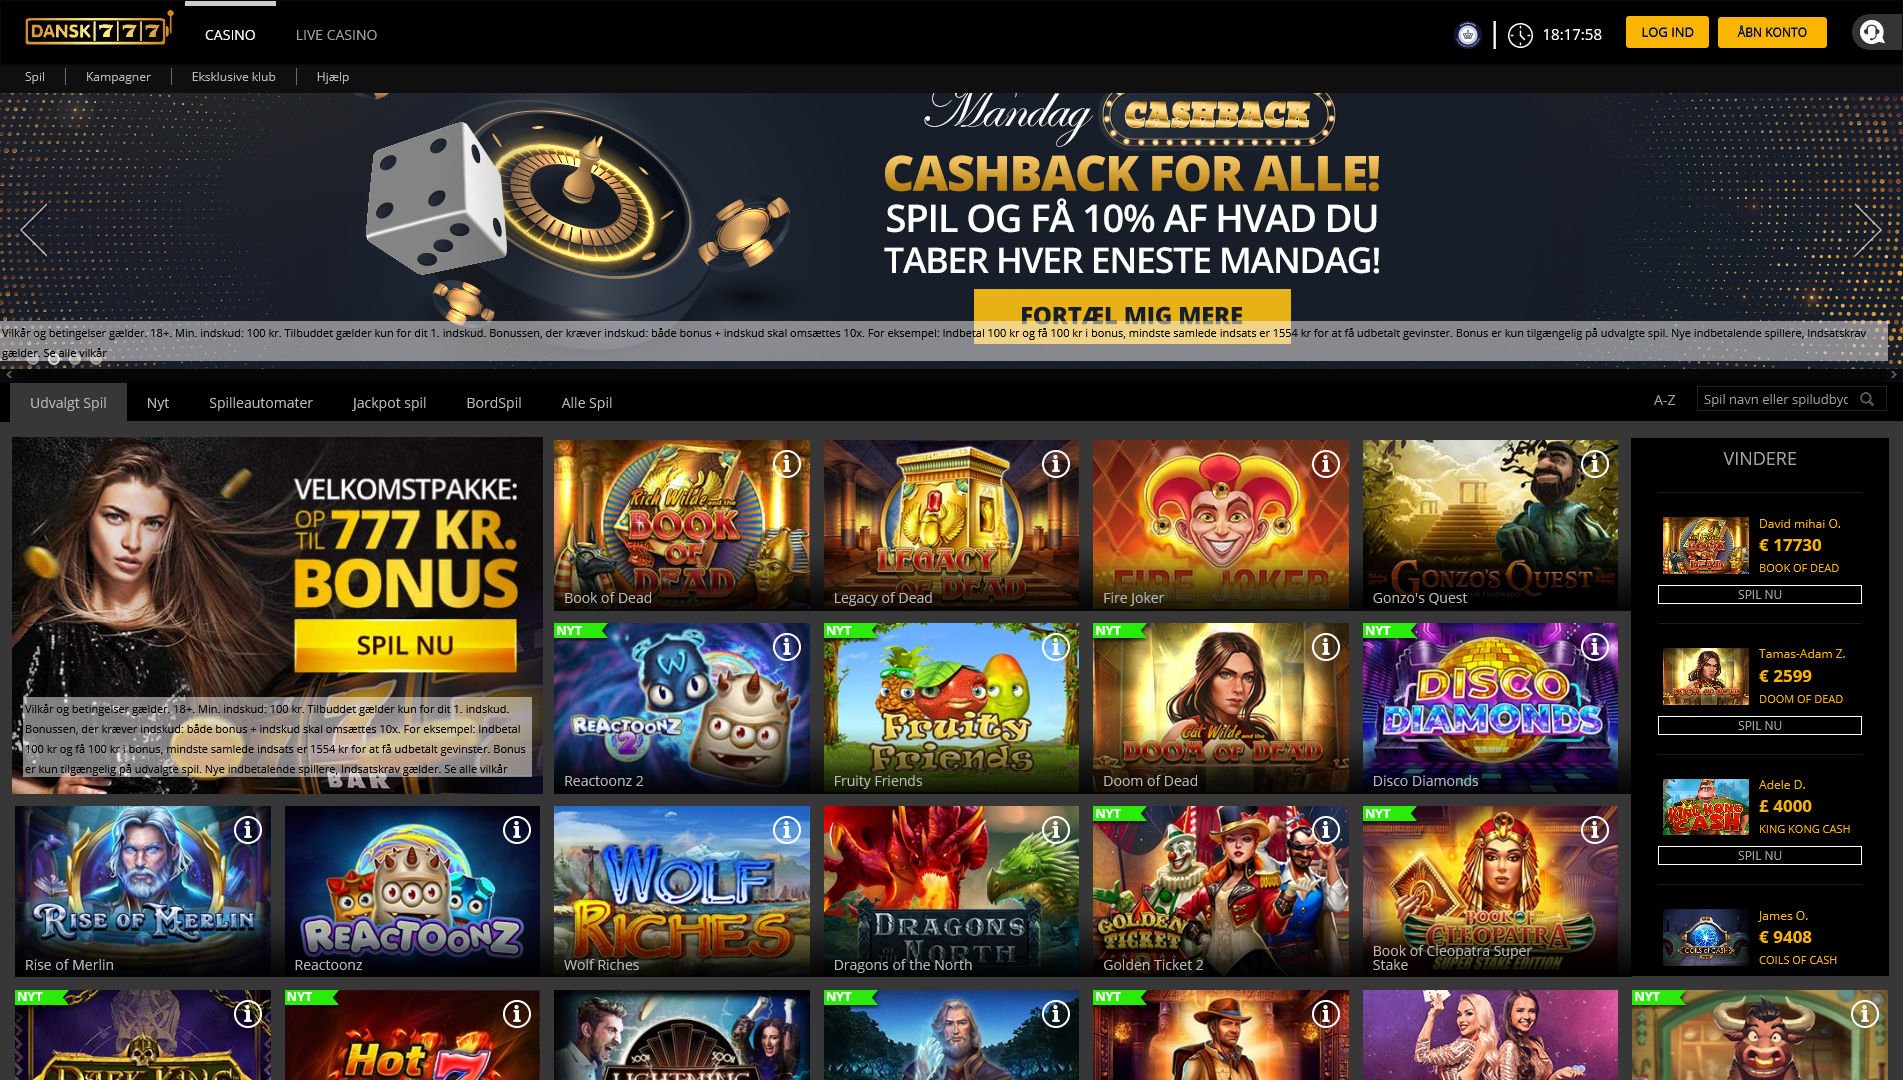 Dansk777 Casino: Grab Your 777 DKK Welcome Bonus Now!